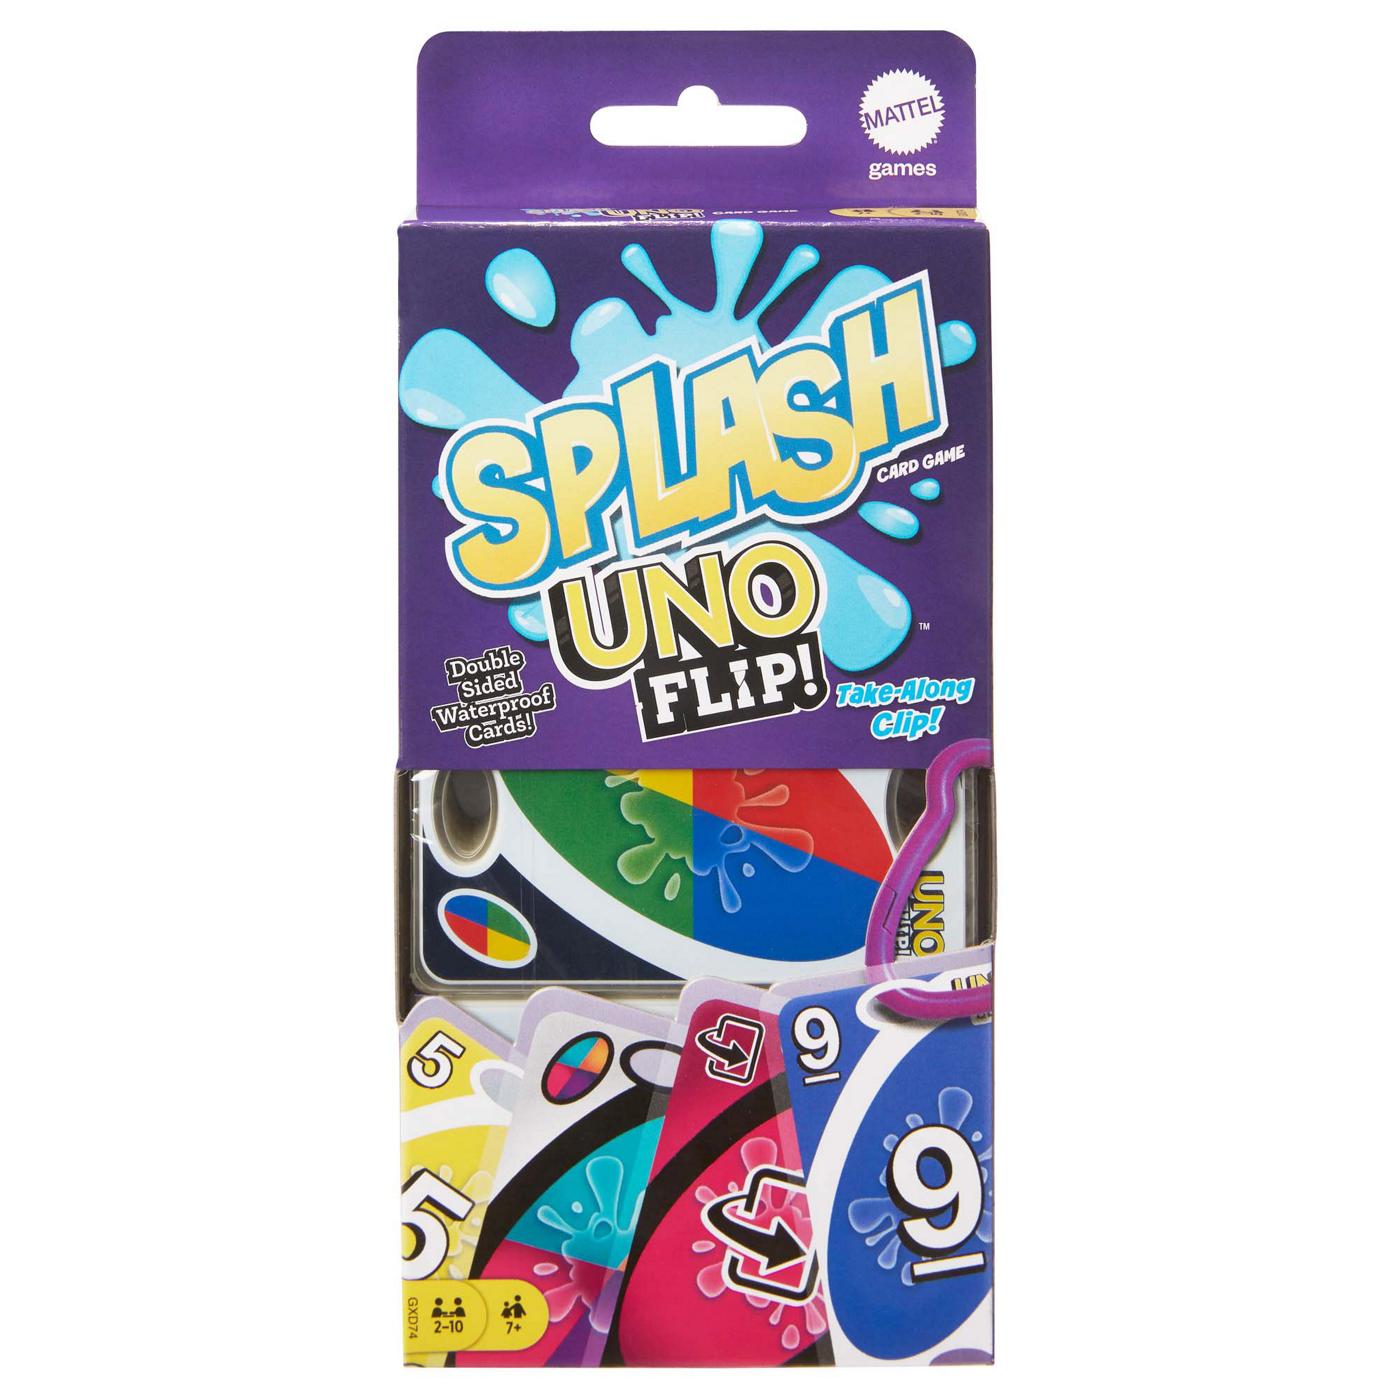 Uno Flip Splash Edition Card Game; image 1 of 3